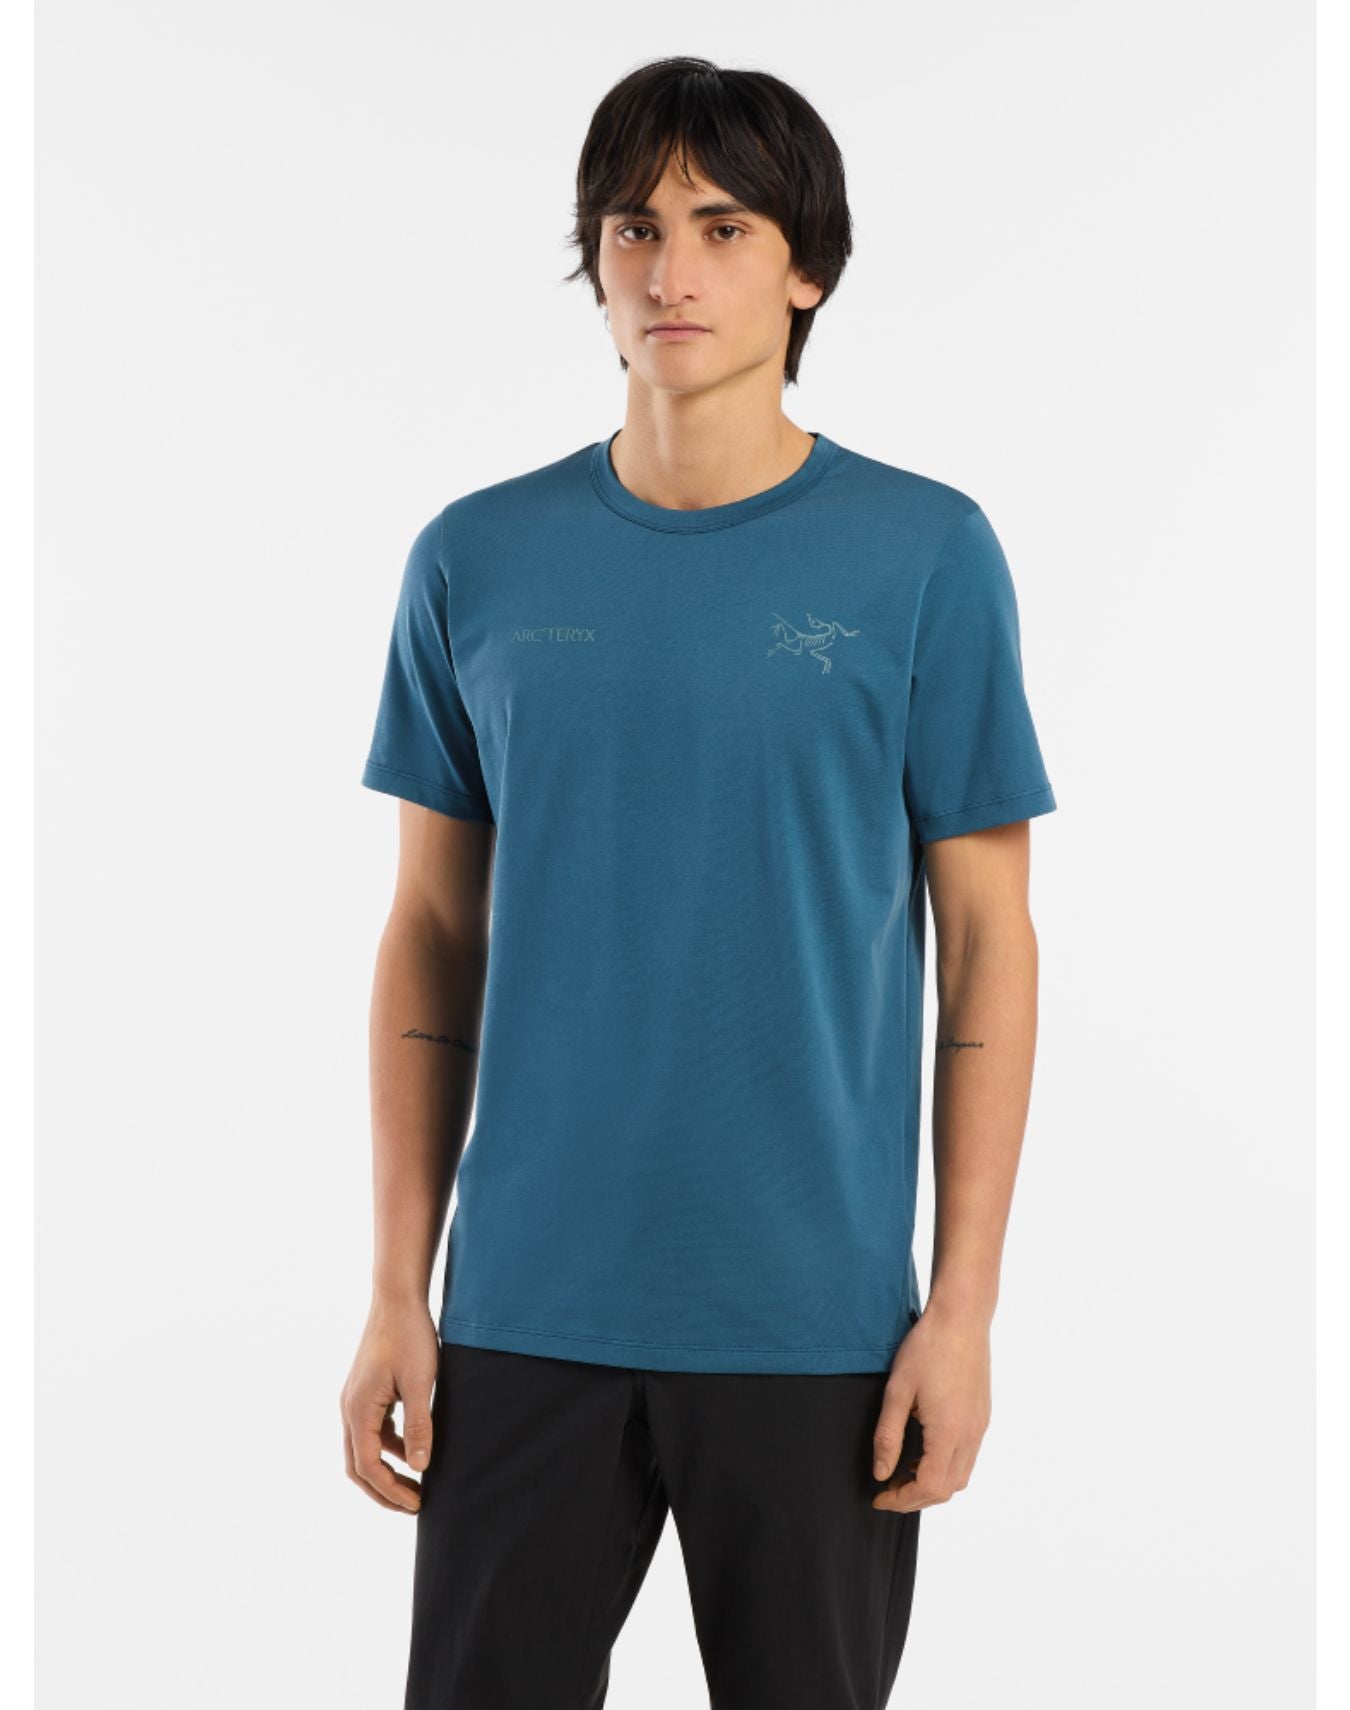 Captive Split Ss T-Shirt Men's in Blue - Arc'teryx Australia